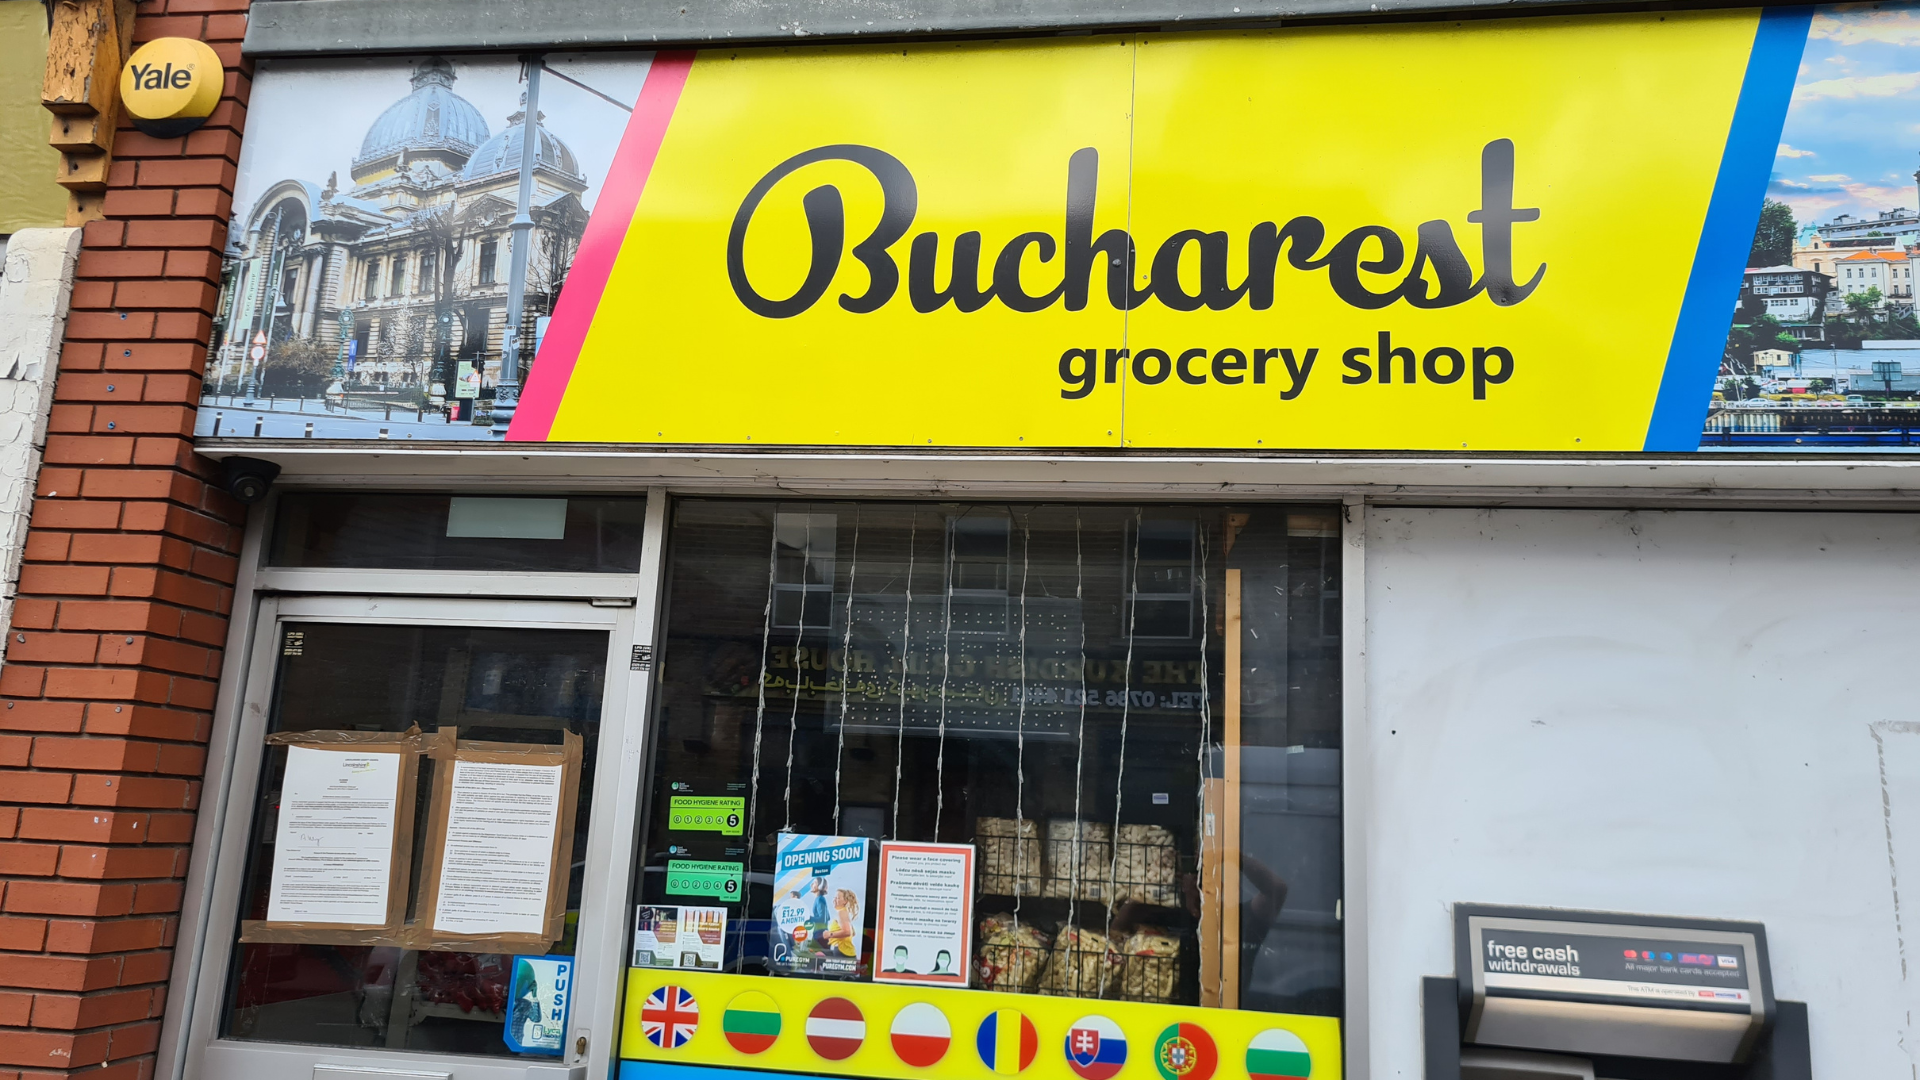 A corner shop called Bucharest in a town